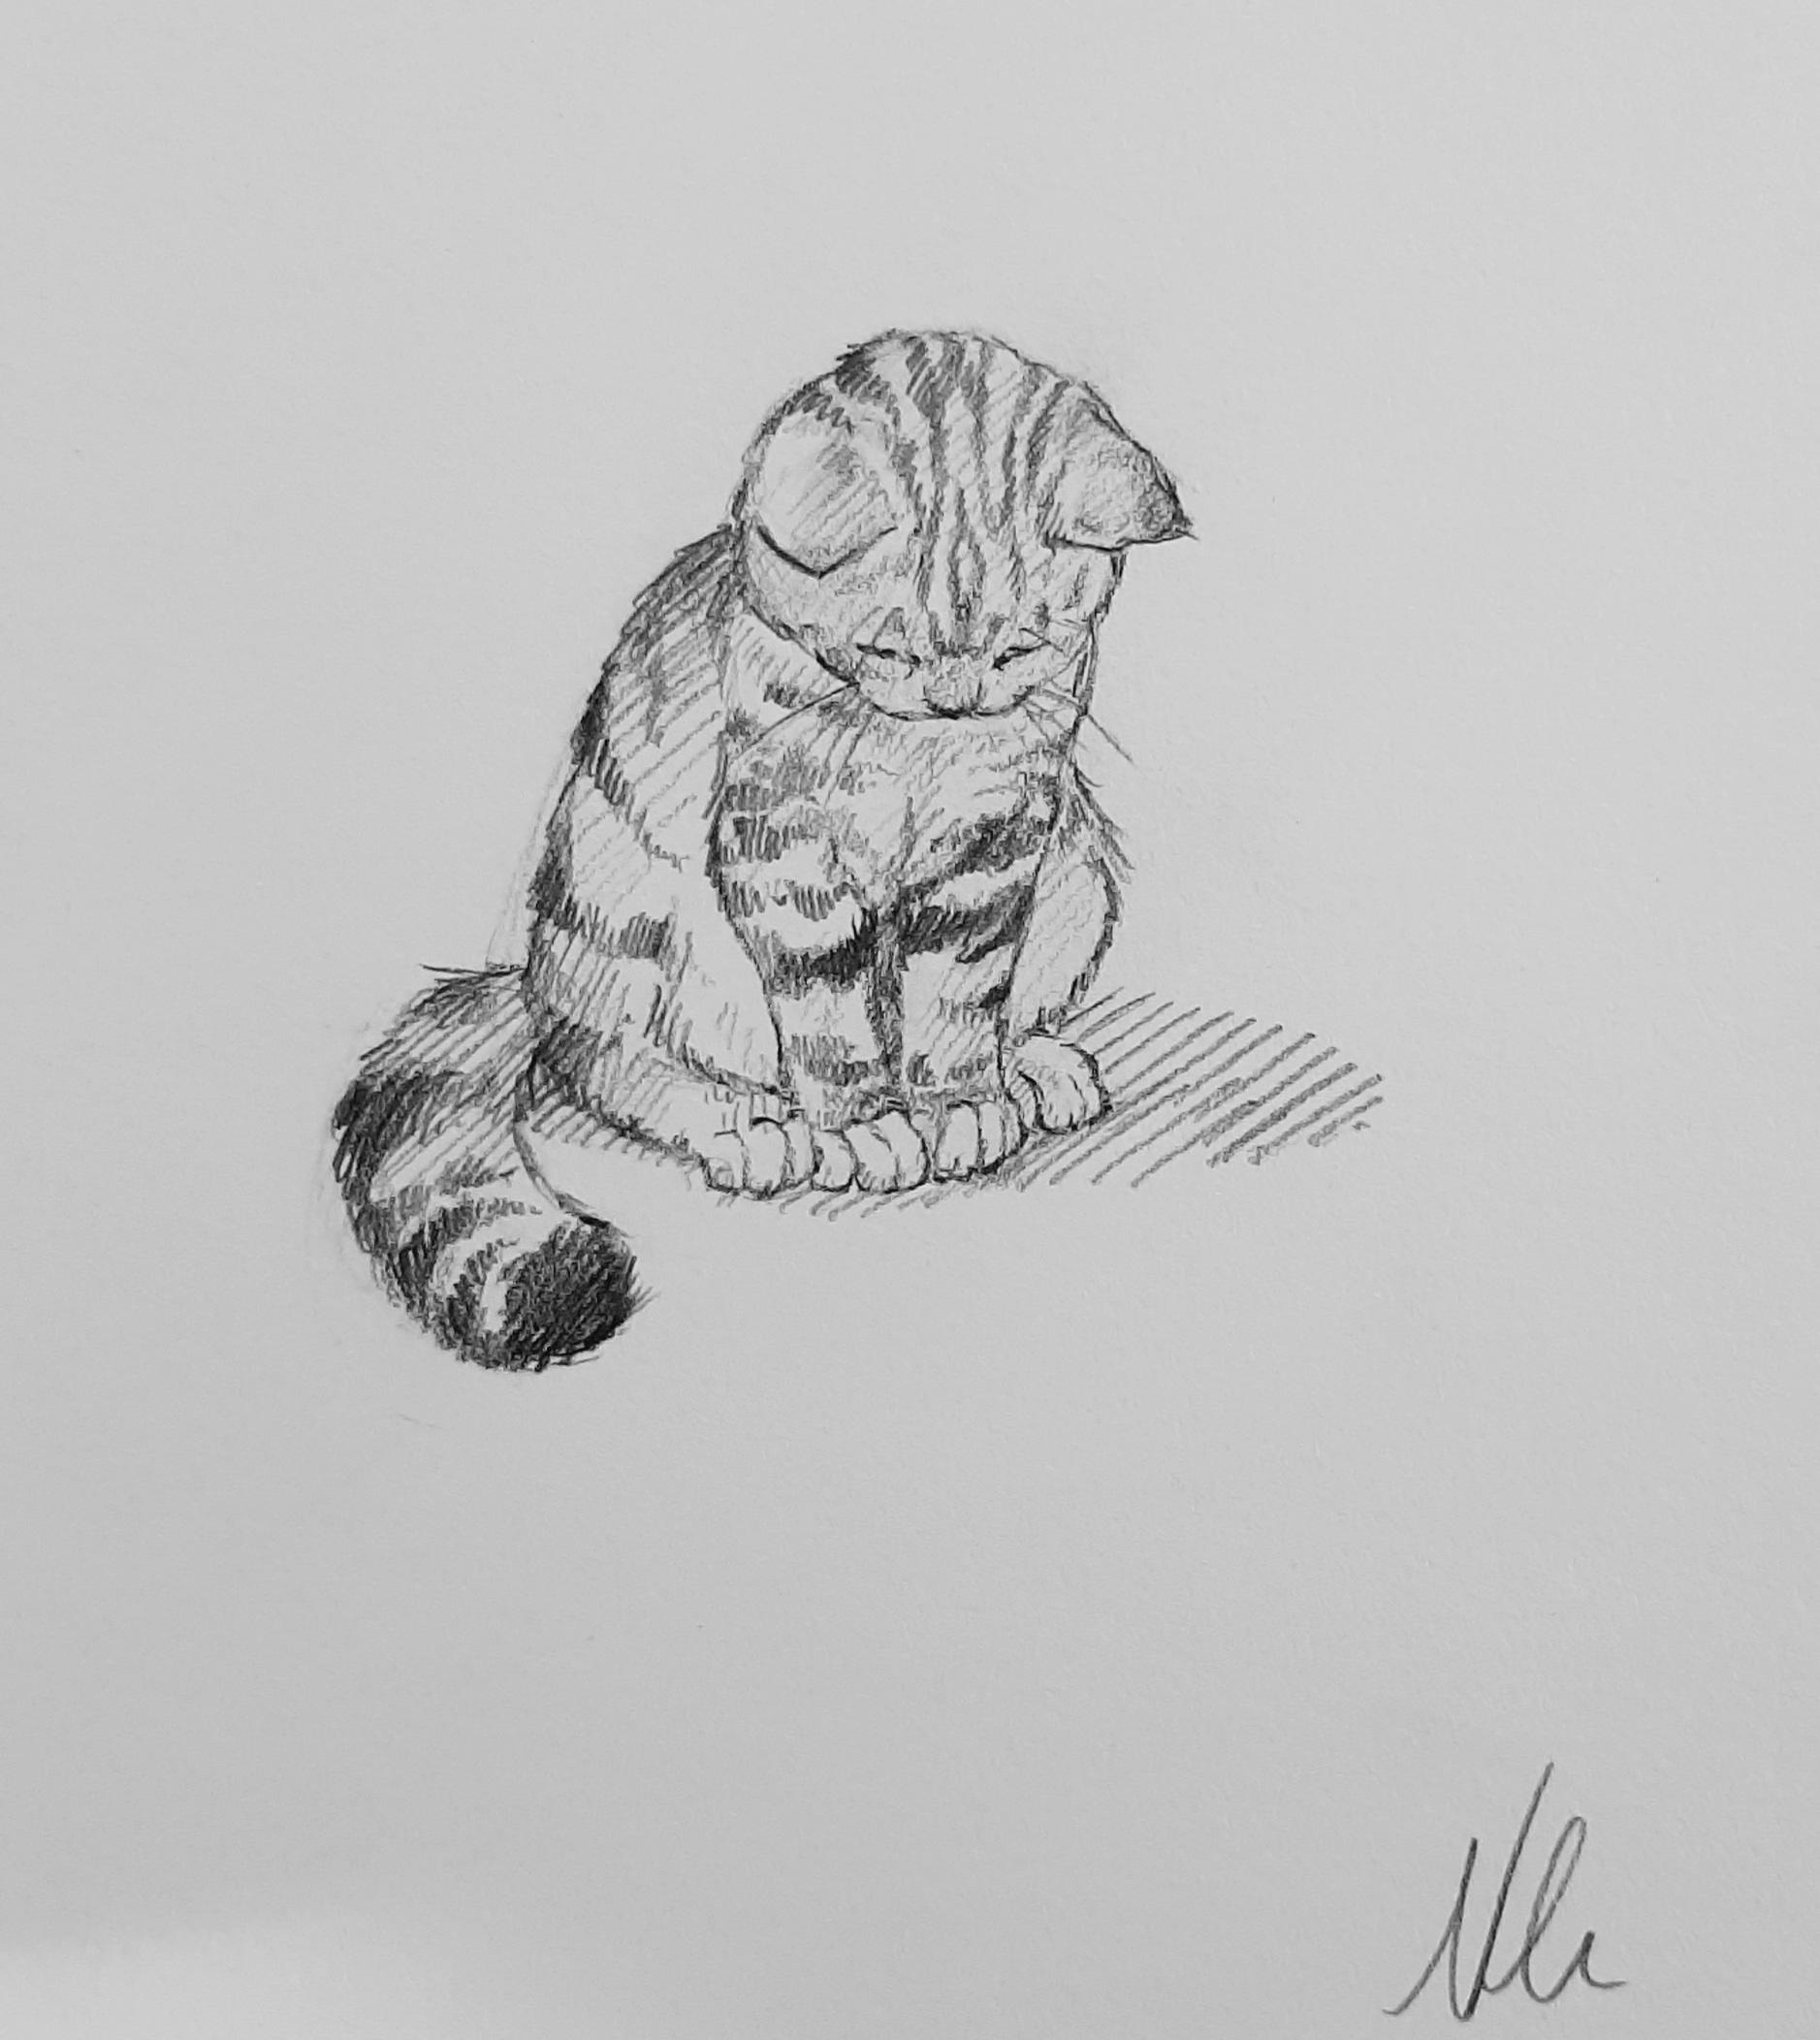 I drew a itsy-bitsy little bit of cat